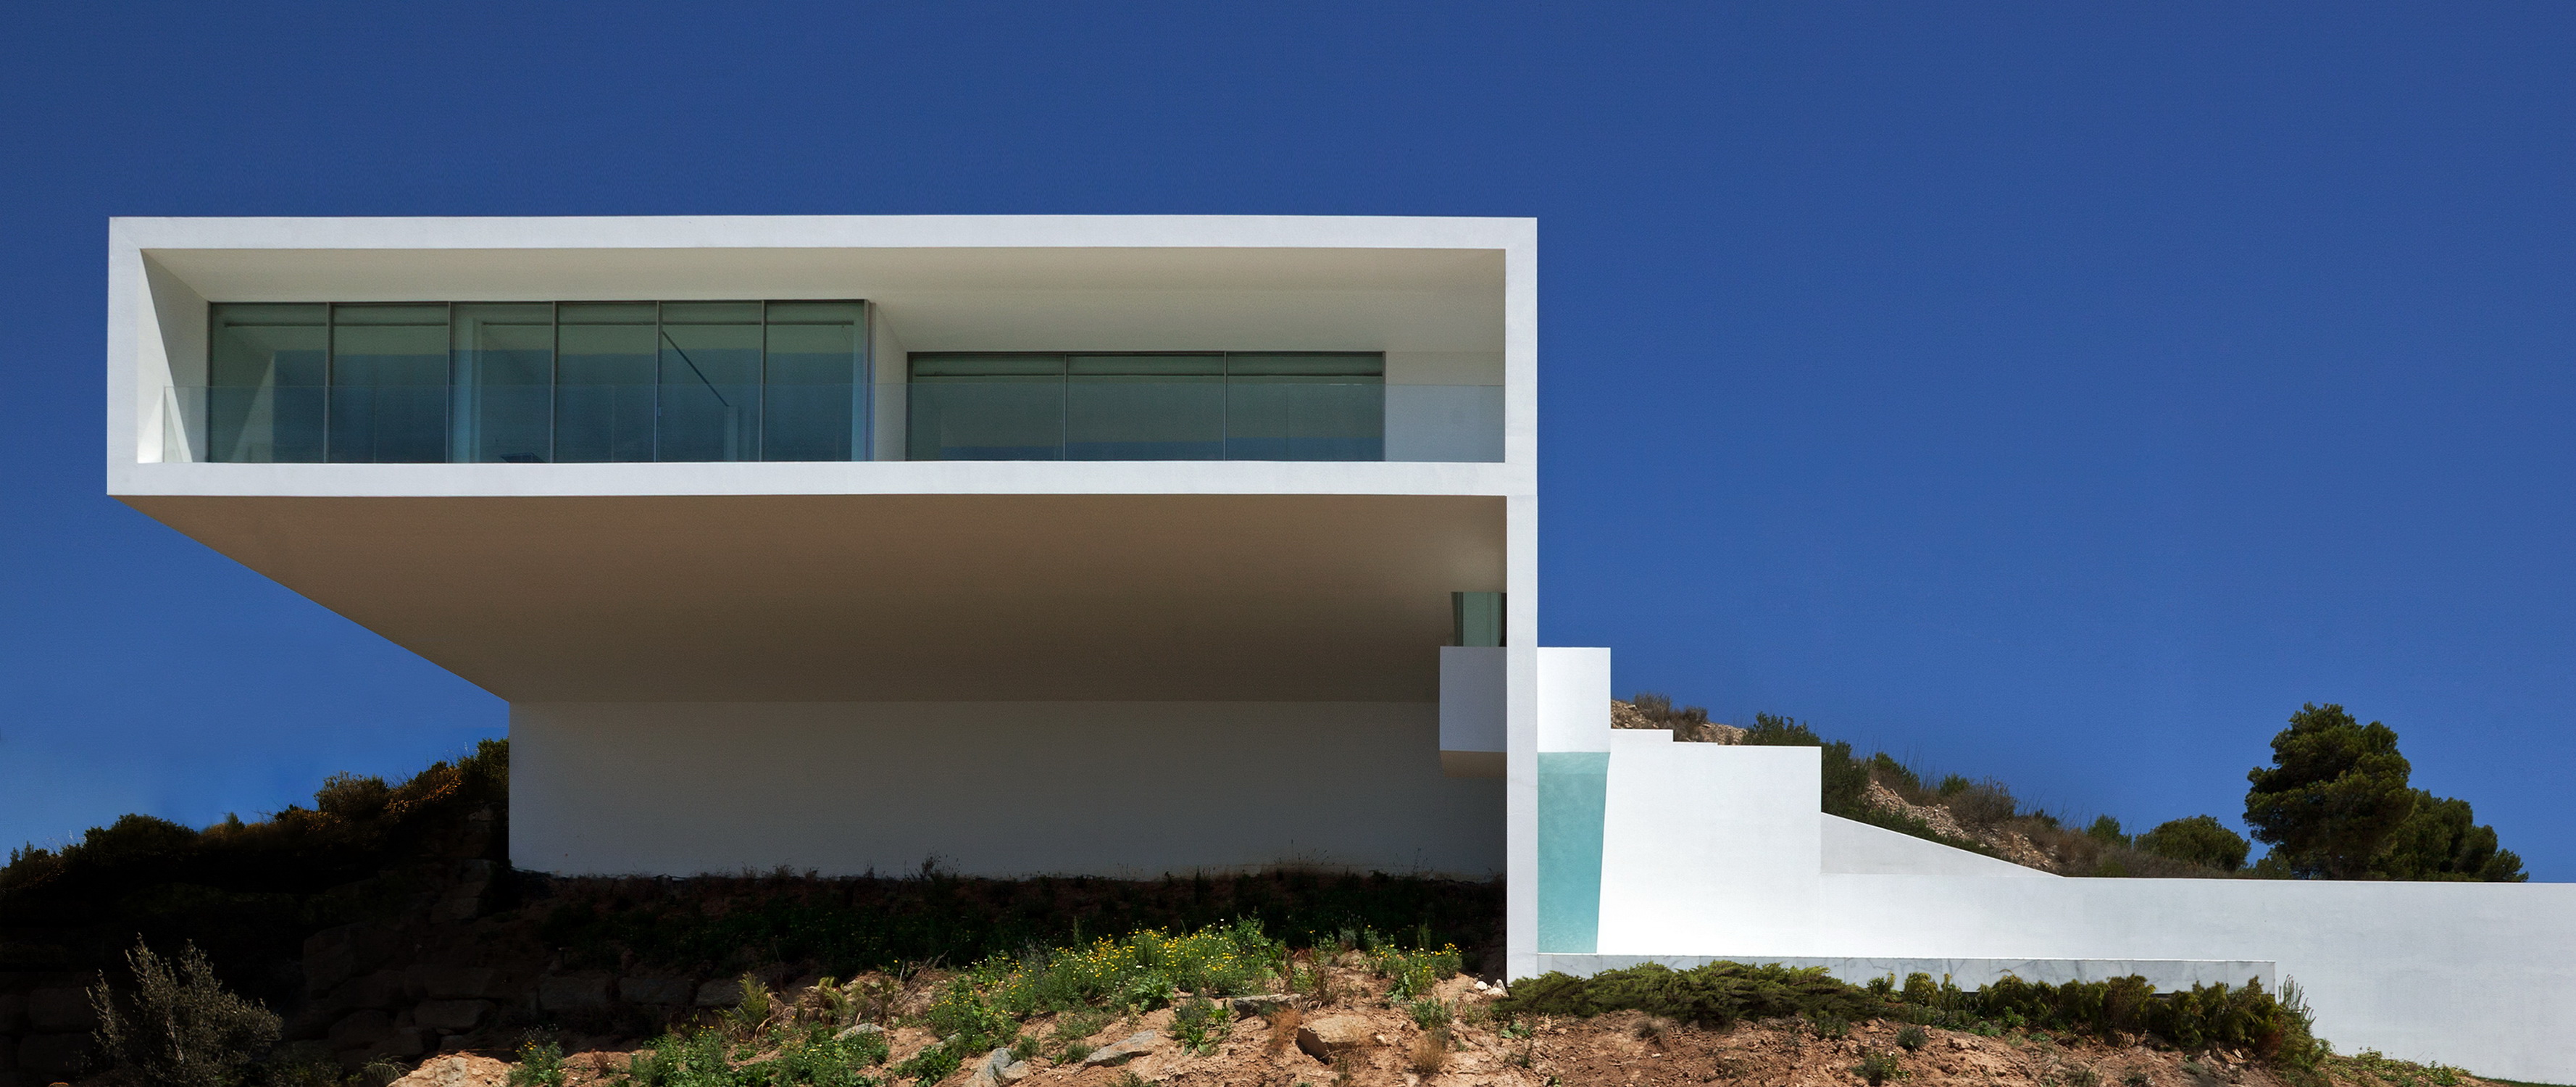 House on Cliffside by Fran Silvestre Arquitectos, Spain, featuring Vitrocsa glass windows